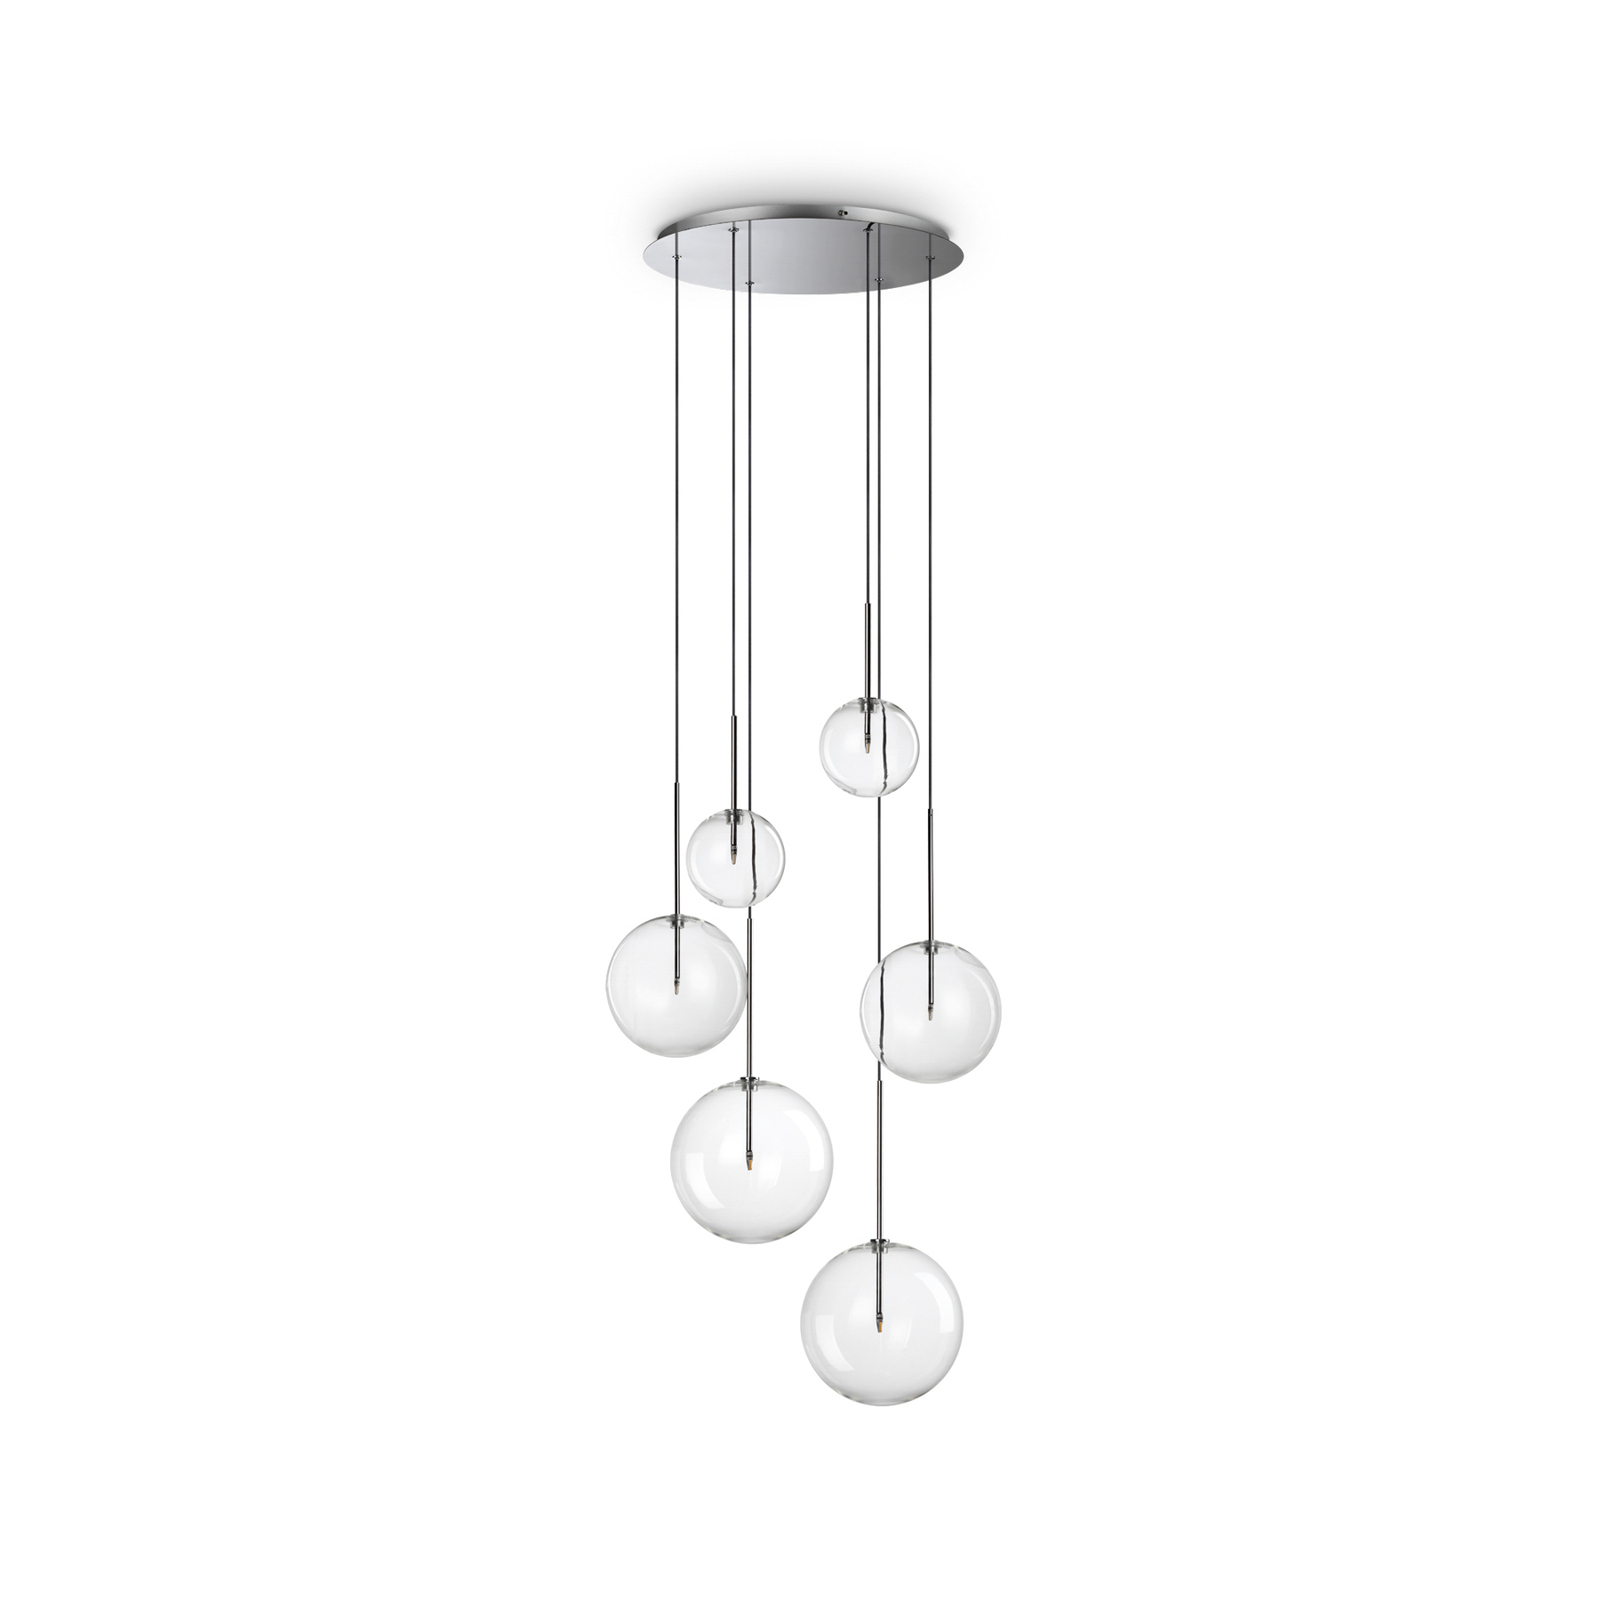 Ideal Lux Equinoxe hanglamp 6-lamps chroomkleurig helder glas